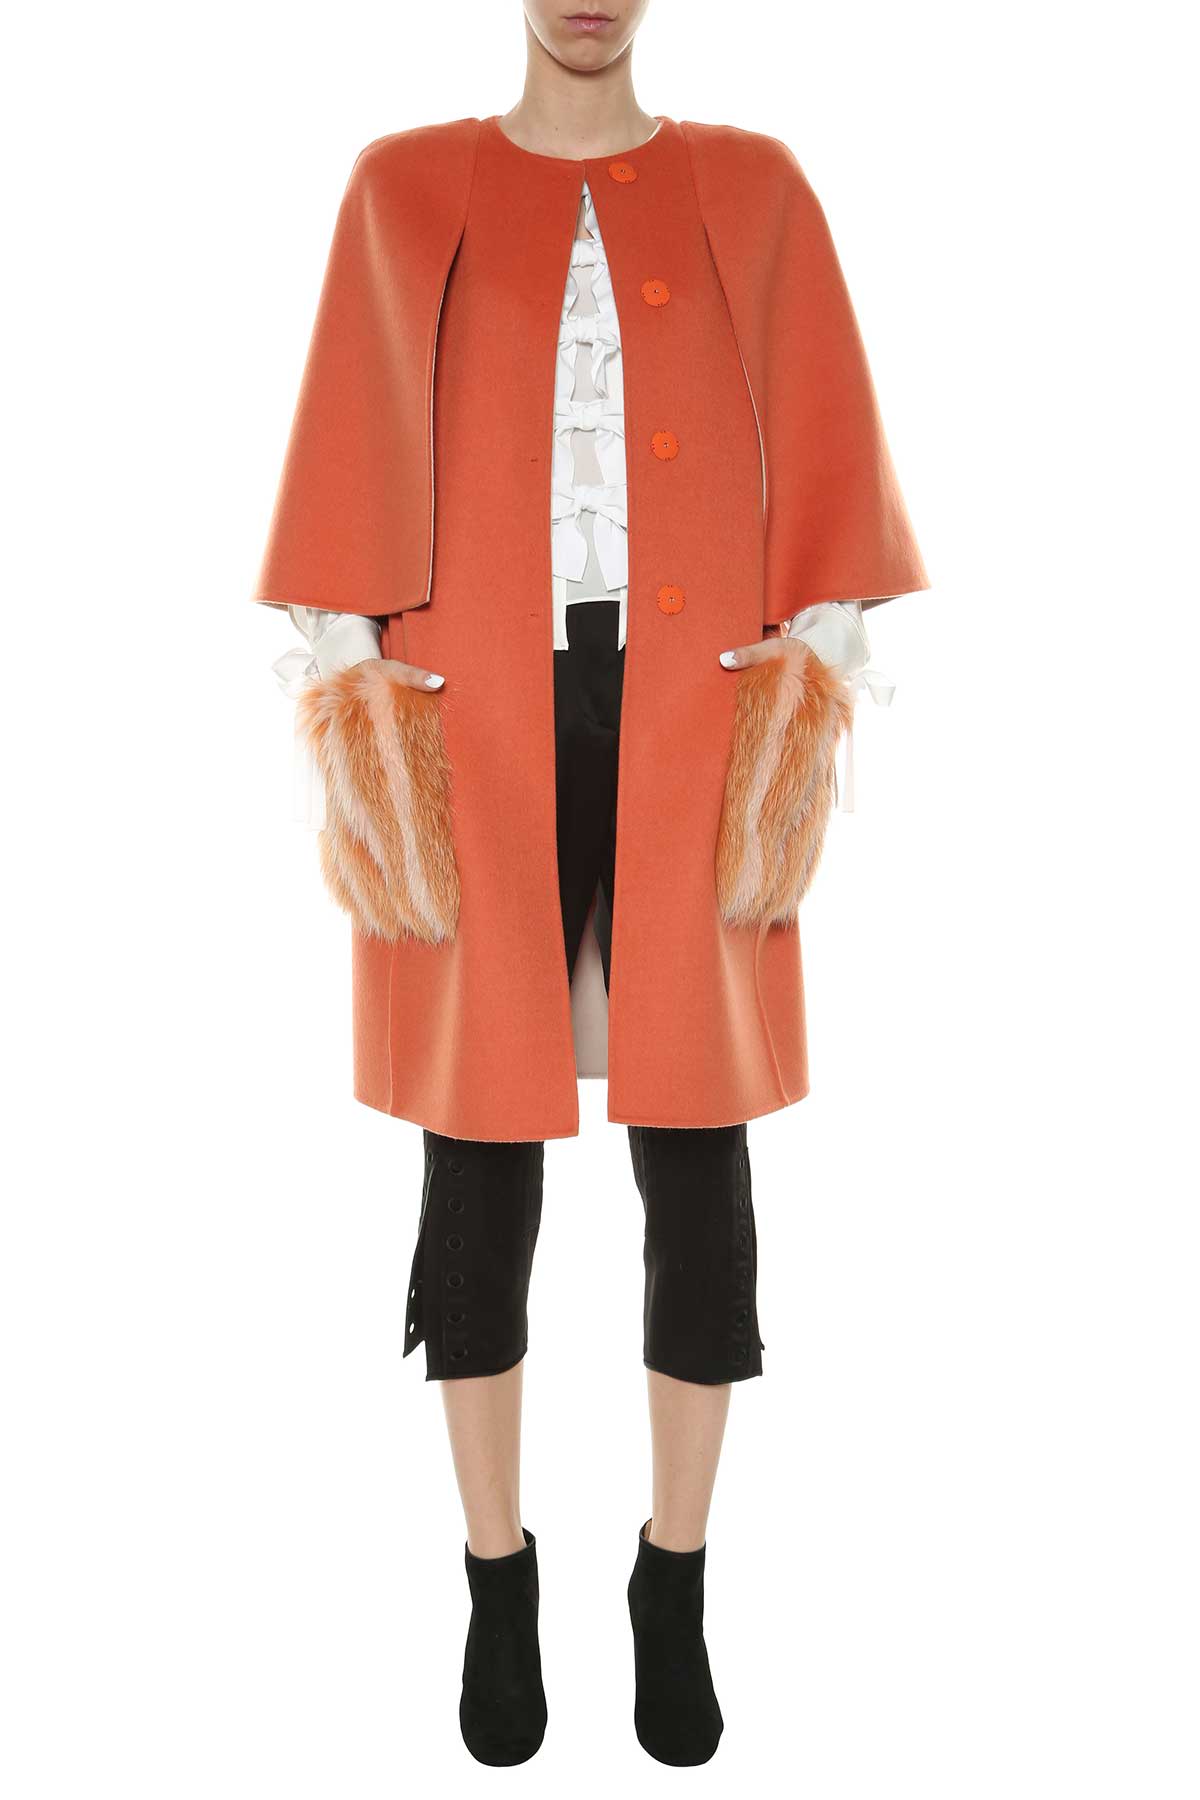 Fendi - Fendi Double Wool Coat With Fur Pockets - Arancio, Women's